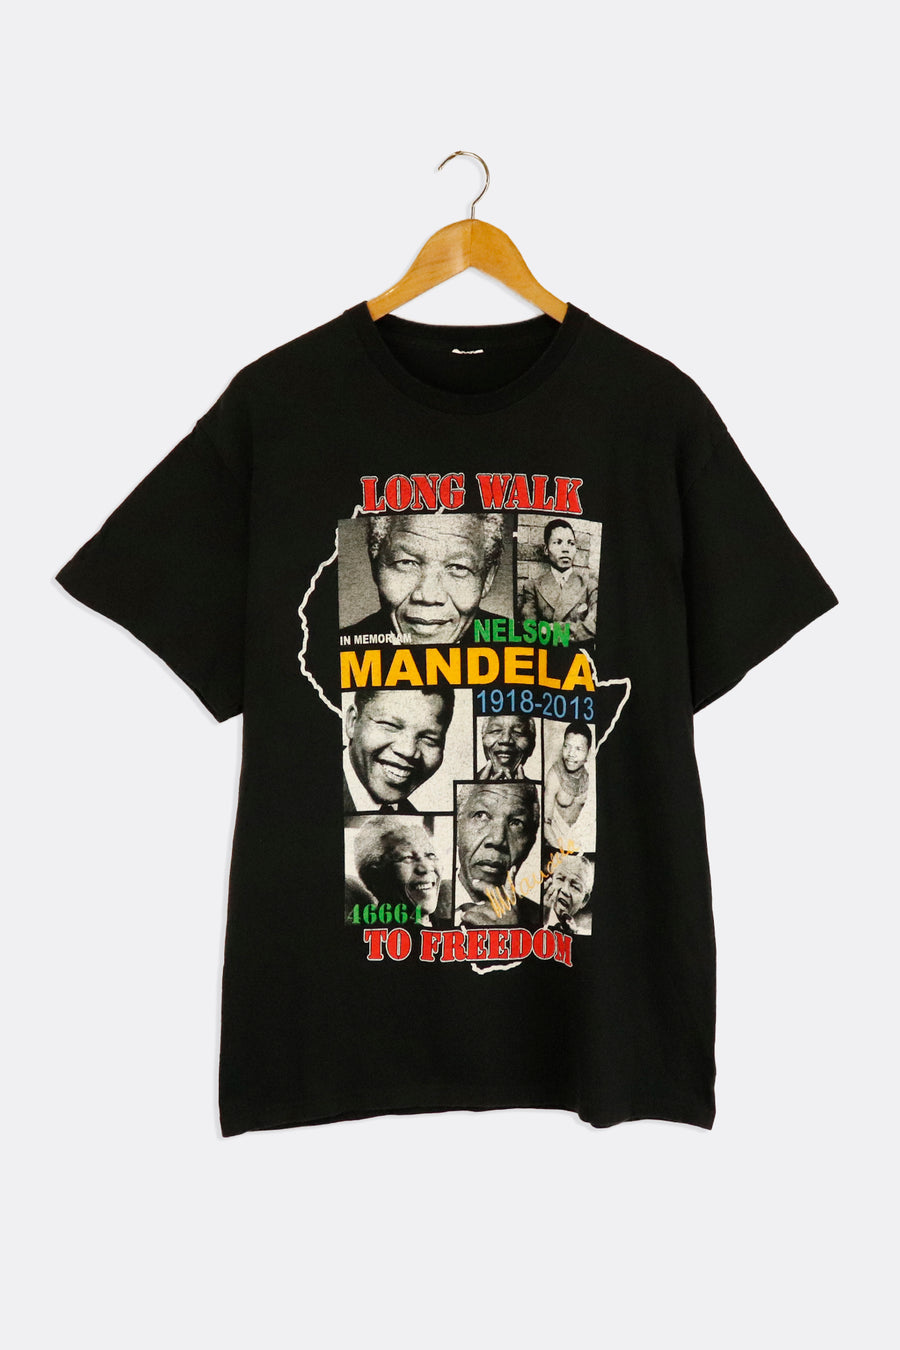 Vintage Nelson Mandela Memorial Shirt Long Walk To Freedom T Shirt